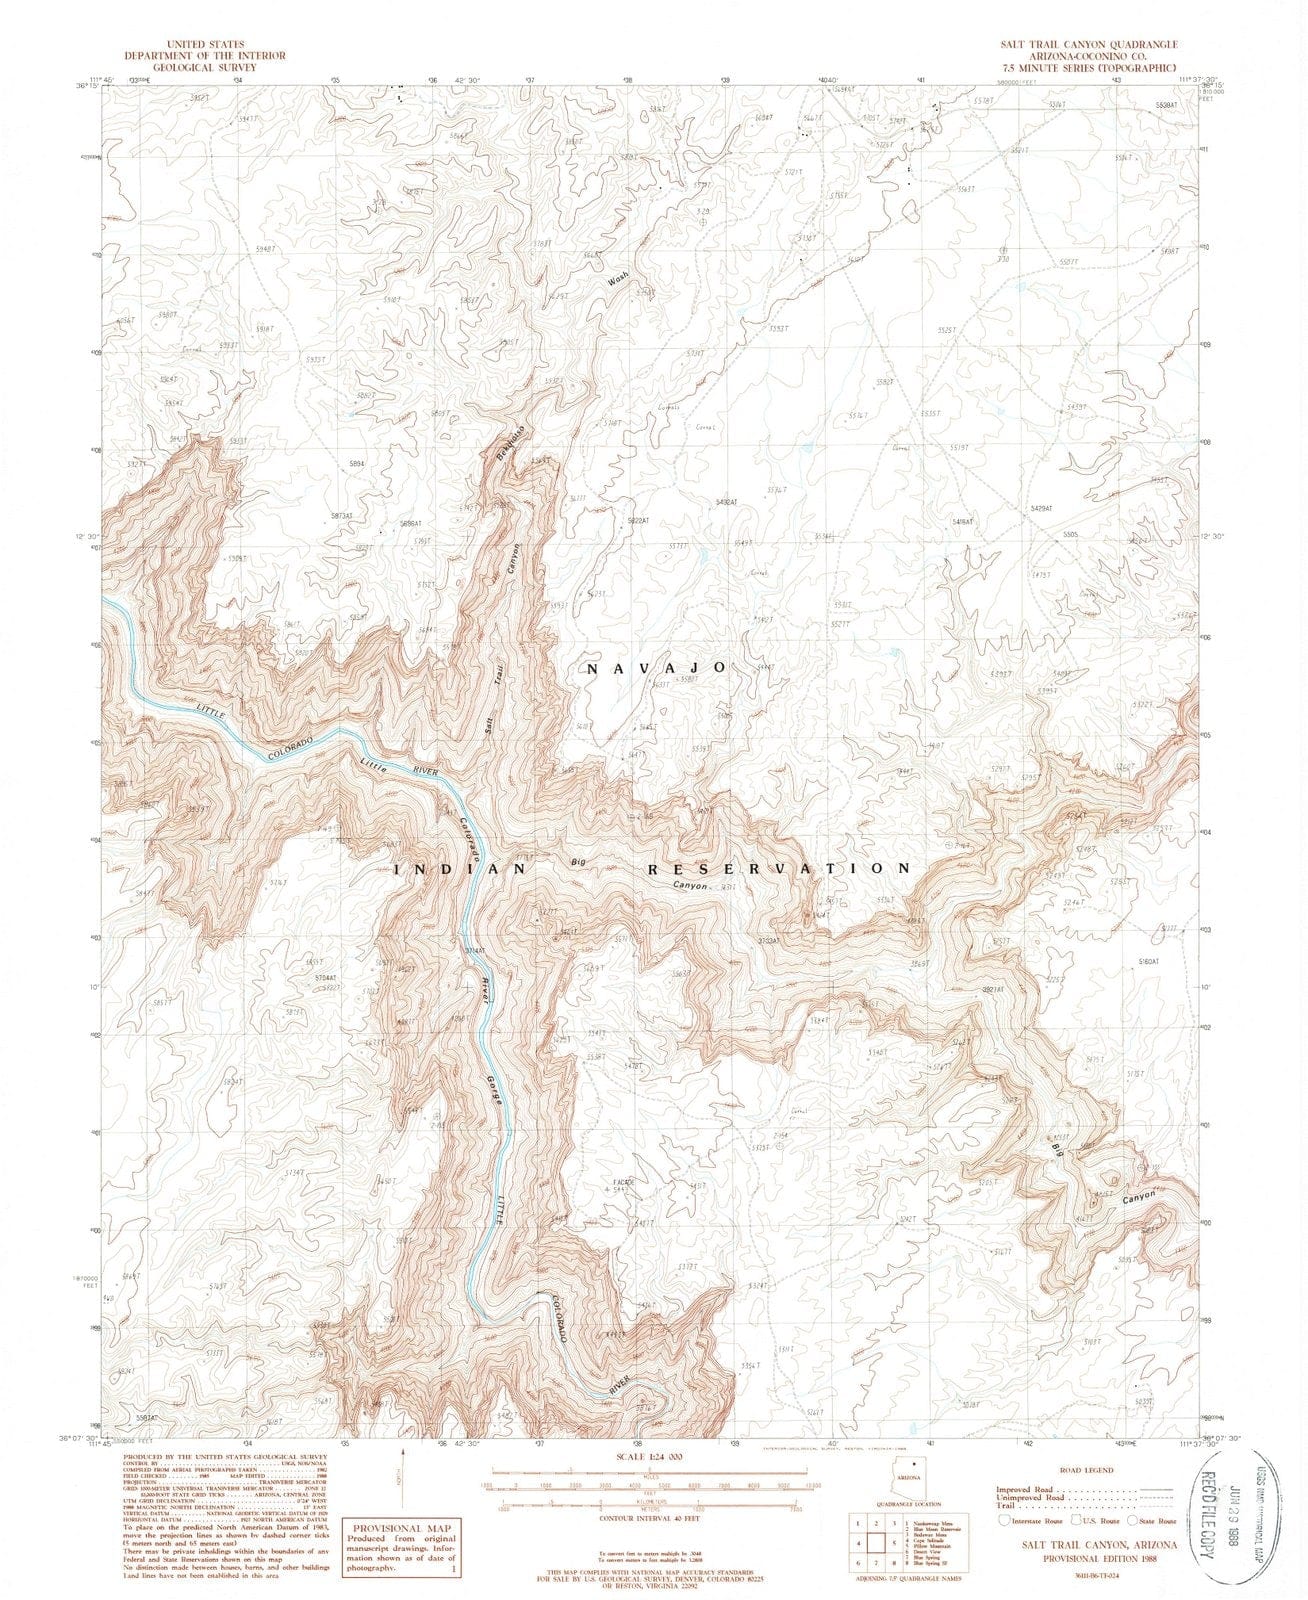 1988 Salt Trail Canyon, AZ - Arizona - USGS Topographic Map